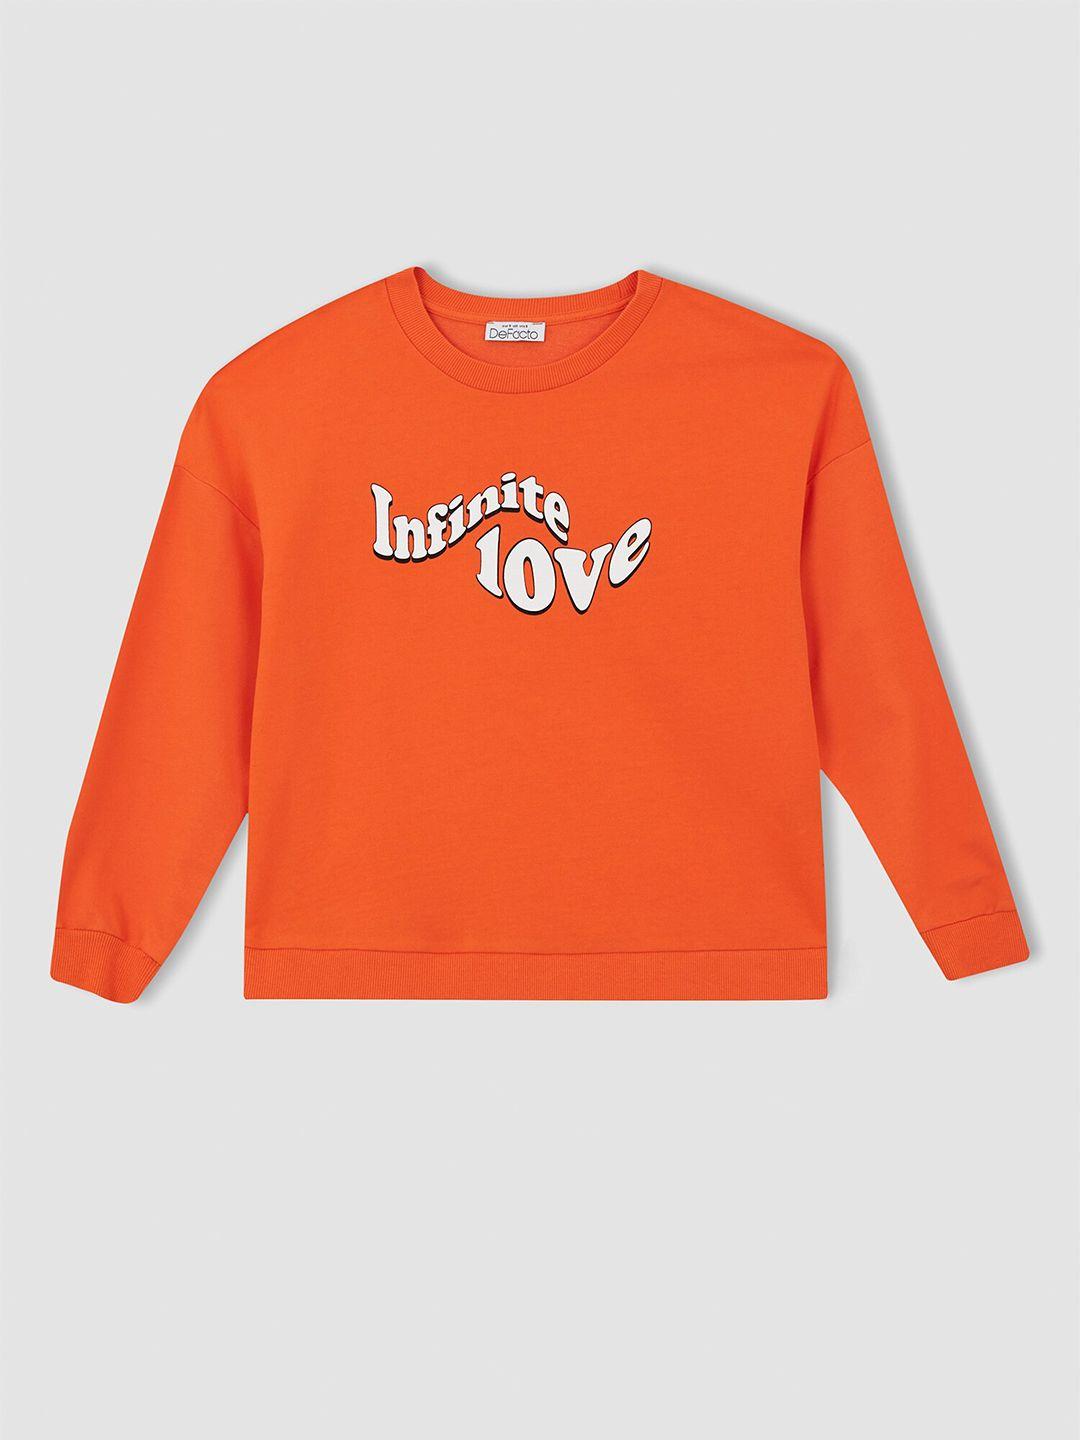 defacto women orange typography printed sweatshirt